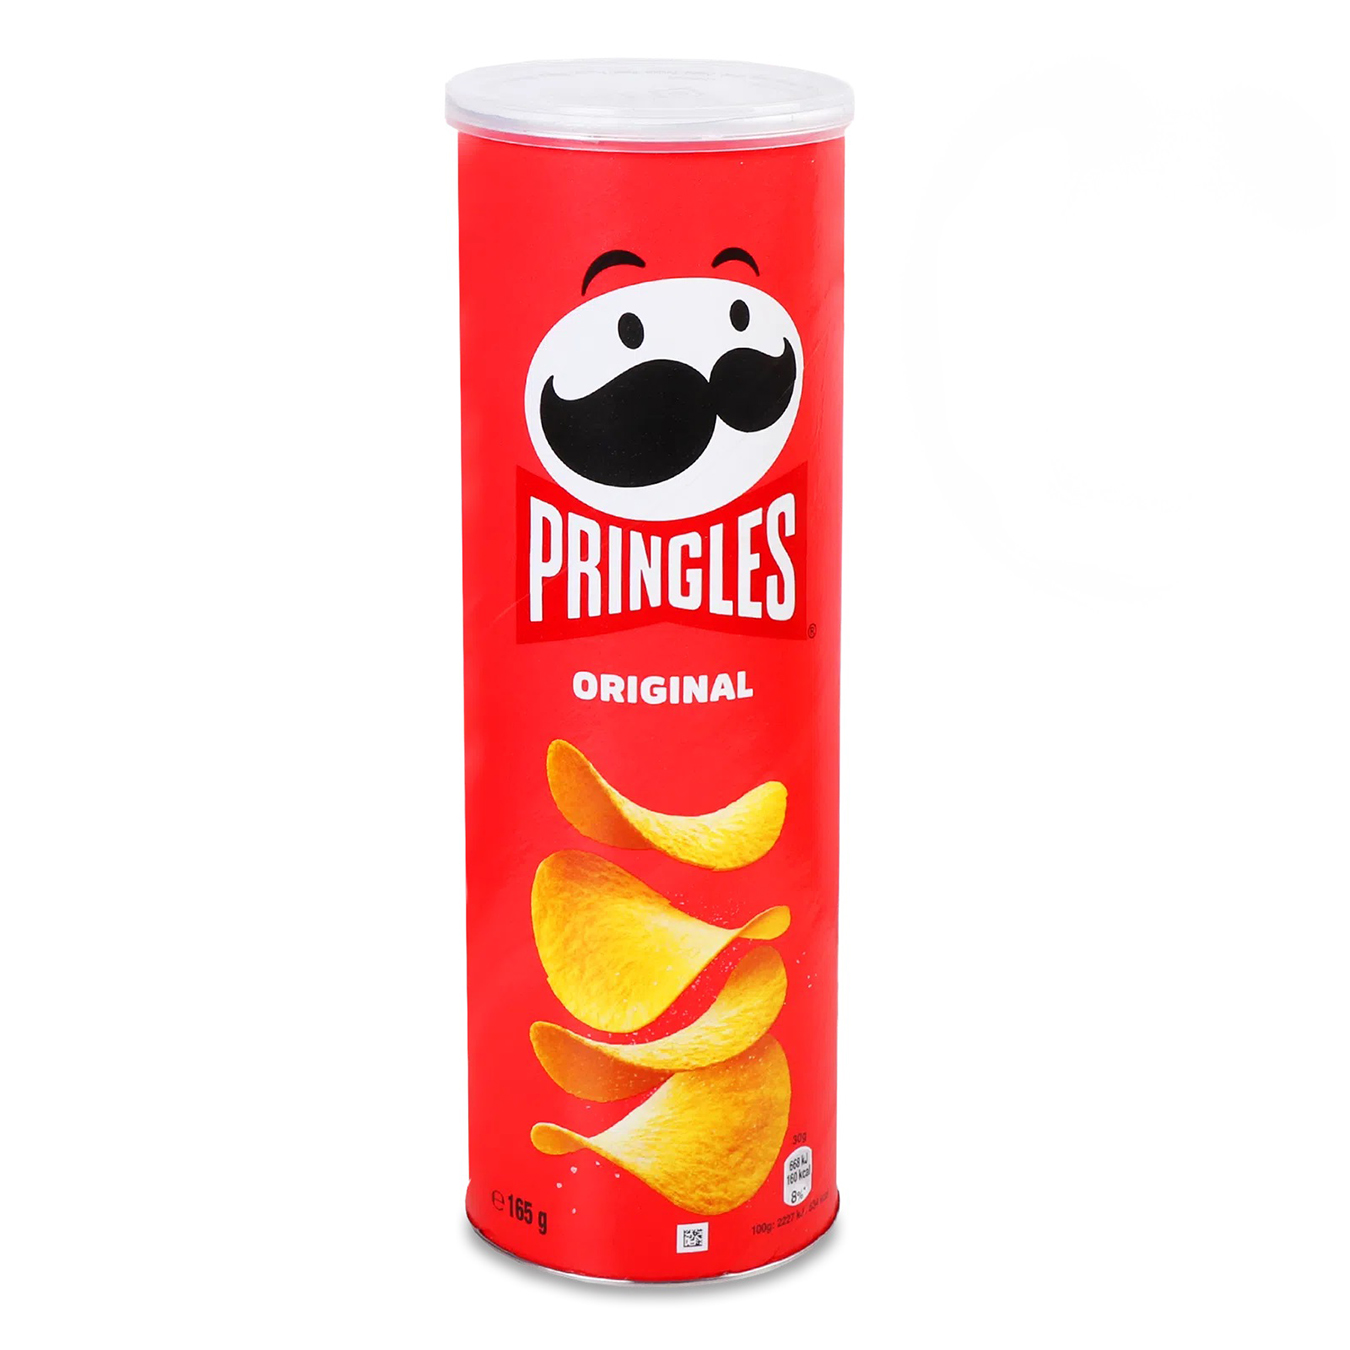 Pringles Potato chips Original 165g